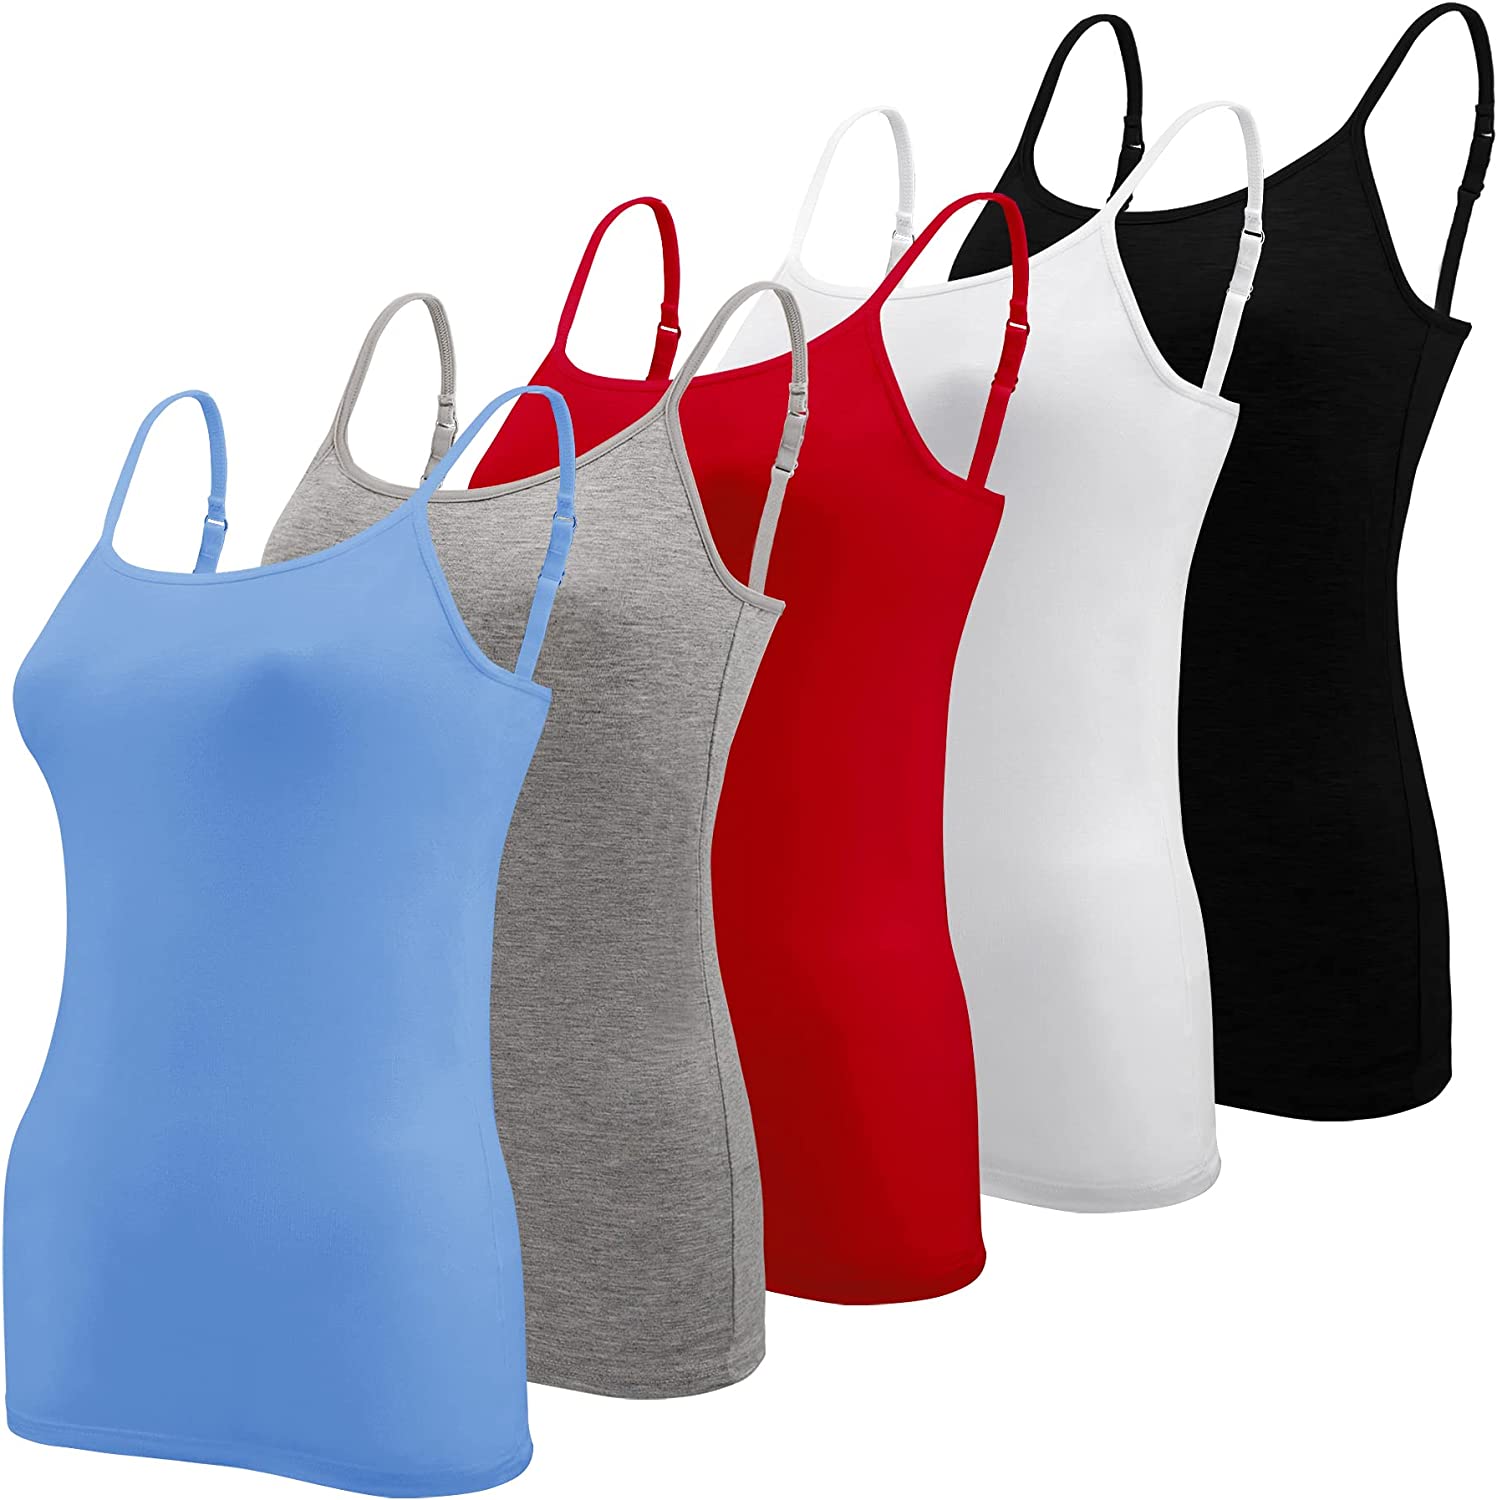  BQTQ 5 Pcs Basic Tank Tops For Women Undershirt